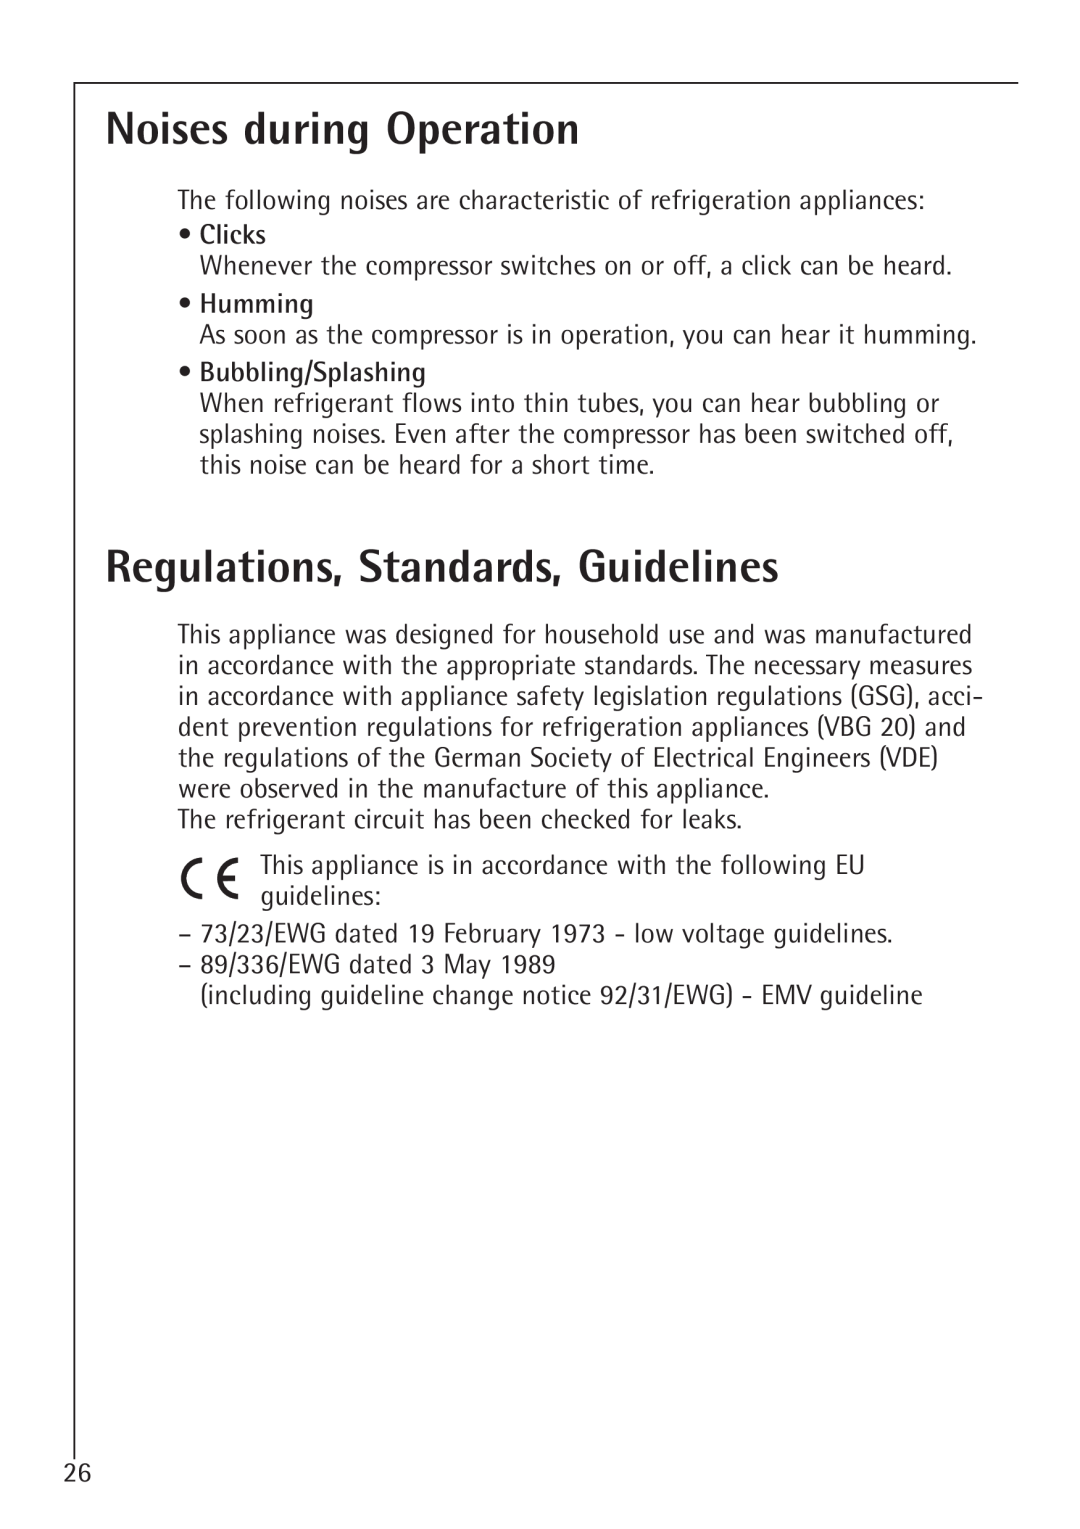 Electrolux 1583-8 TK Noises during Operation, Regulations, Standards, Guidelines, Clicks, Humming, Bubbling/Splashing 